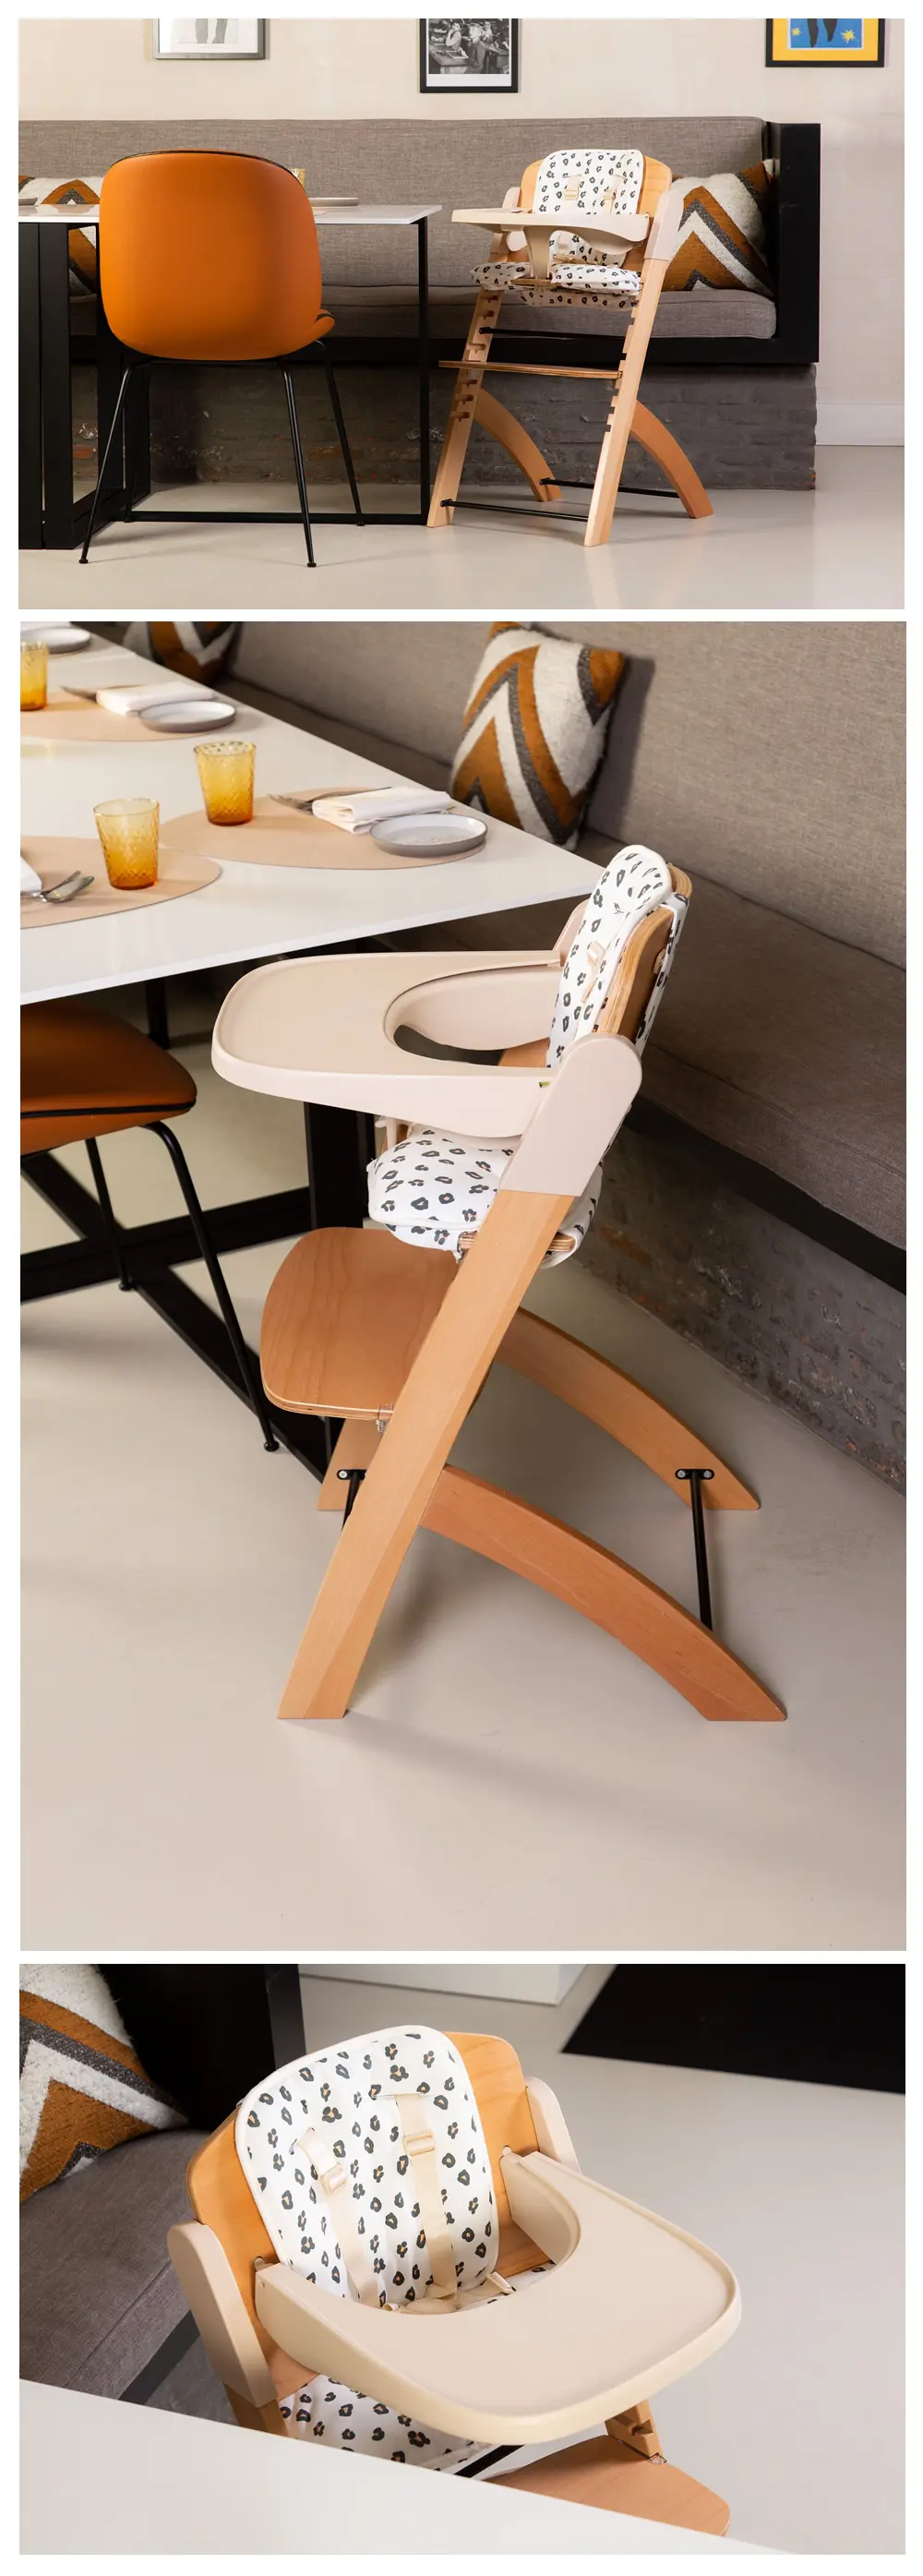 Childhome Evosit 可调式高脚餐椅座垫-豹纹